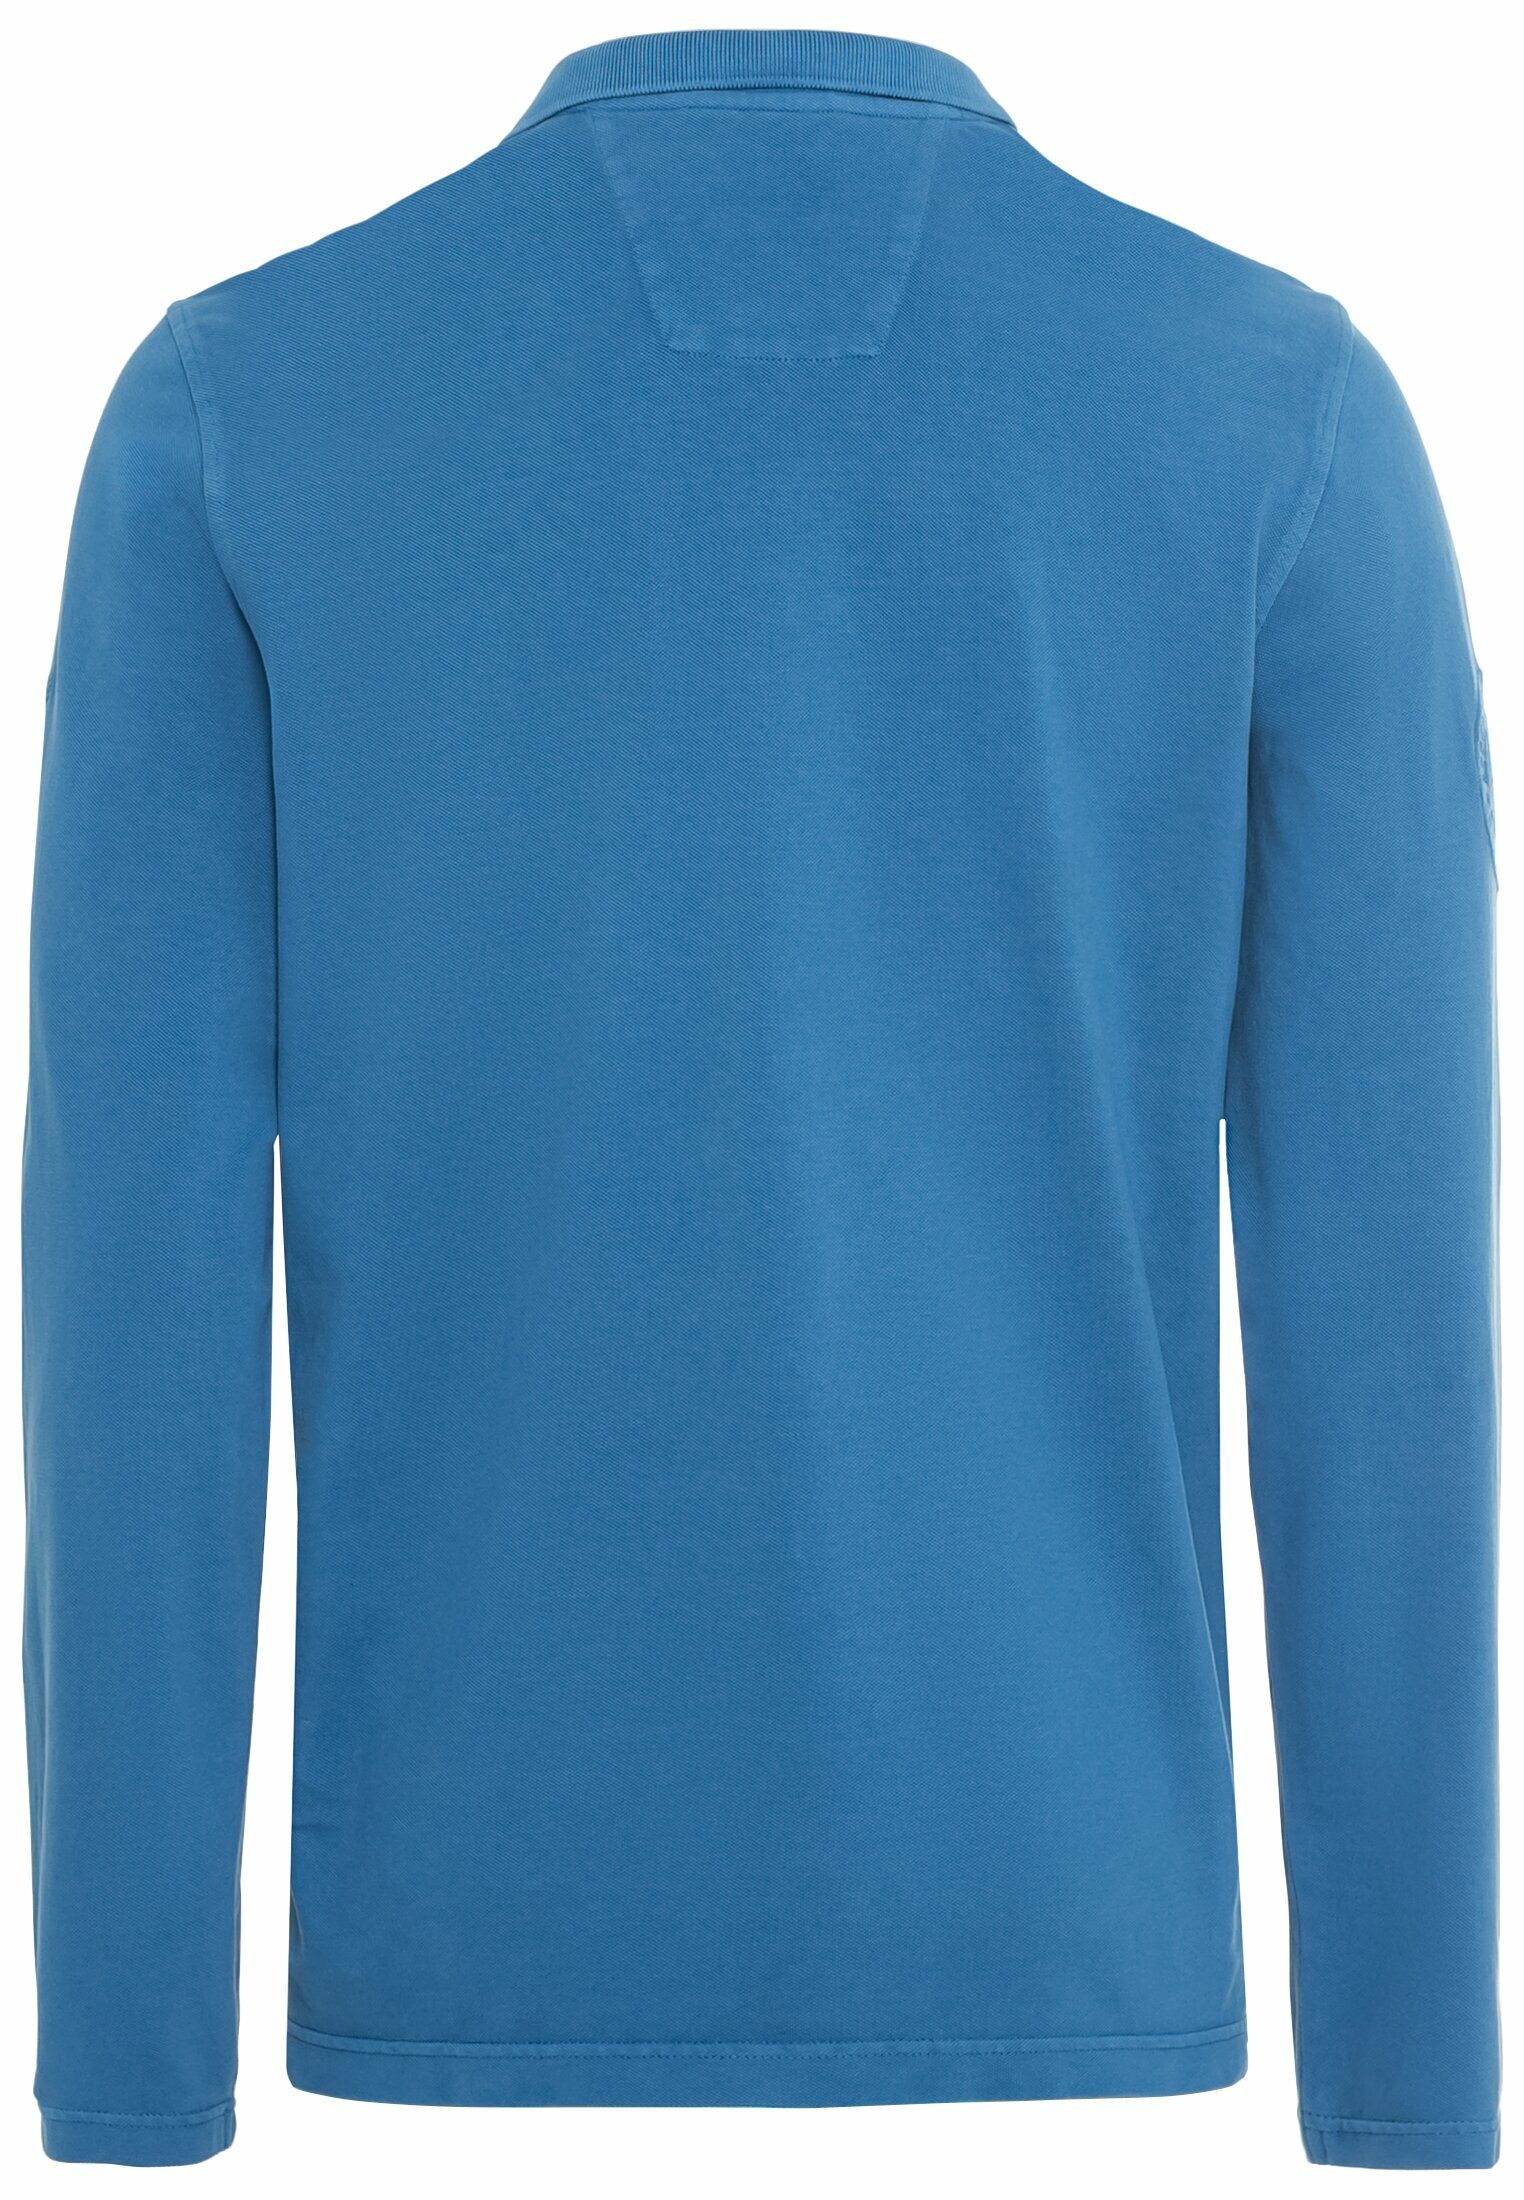 camel active Poloshirt aus Baumwolle Shirts_Langarm-Poloshirt Blau reiner